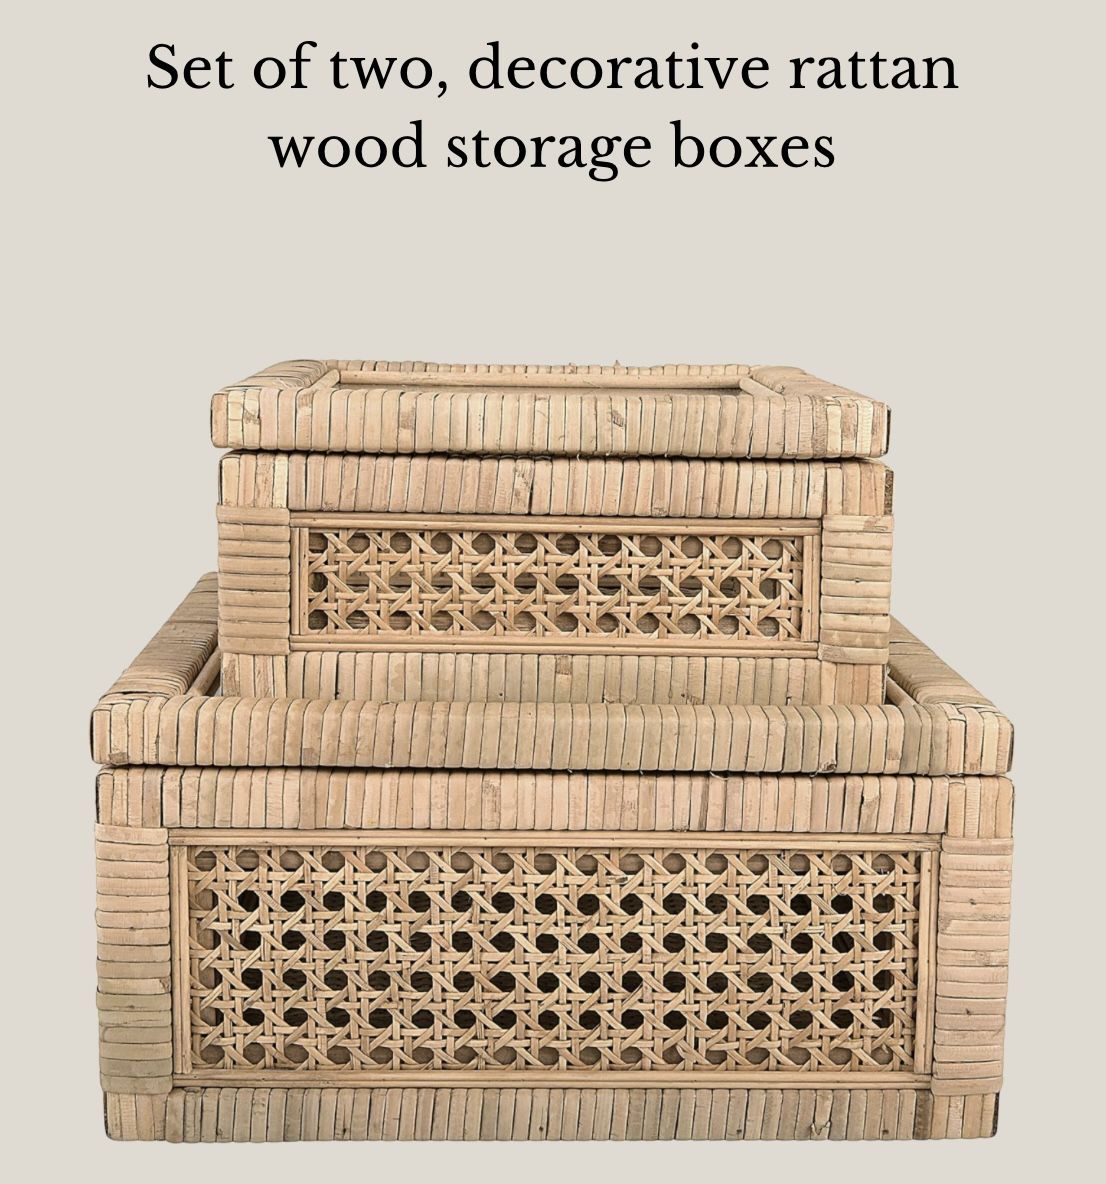 Set of two decorative rattan wood storage boxes, organic home decor, Amazon decor | Amazon (US)